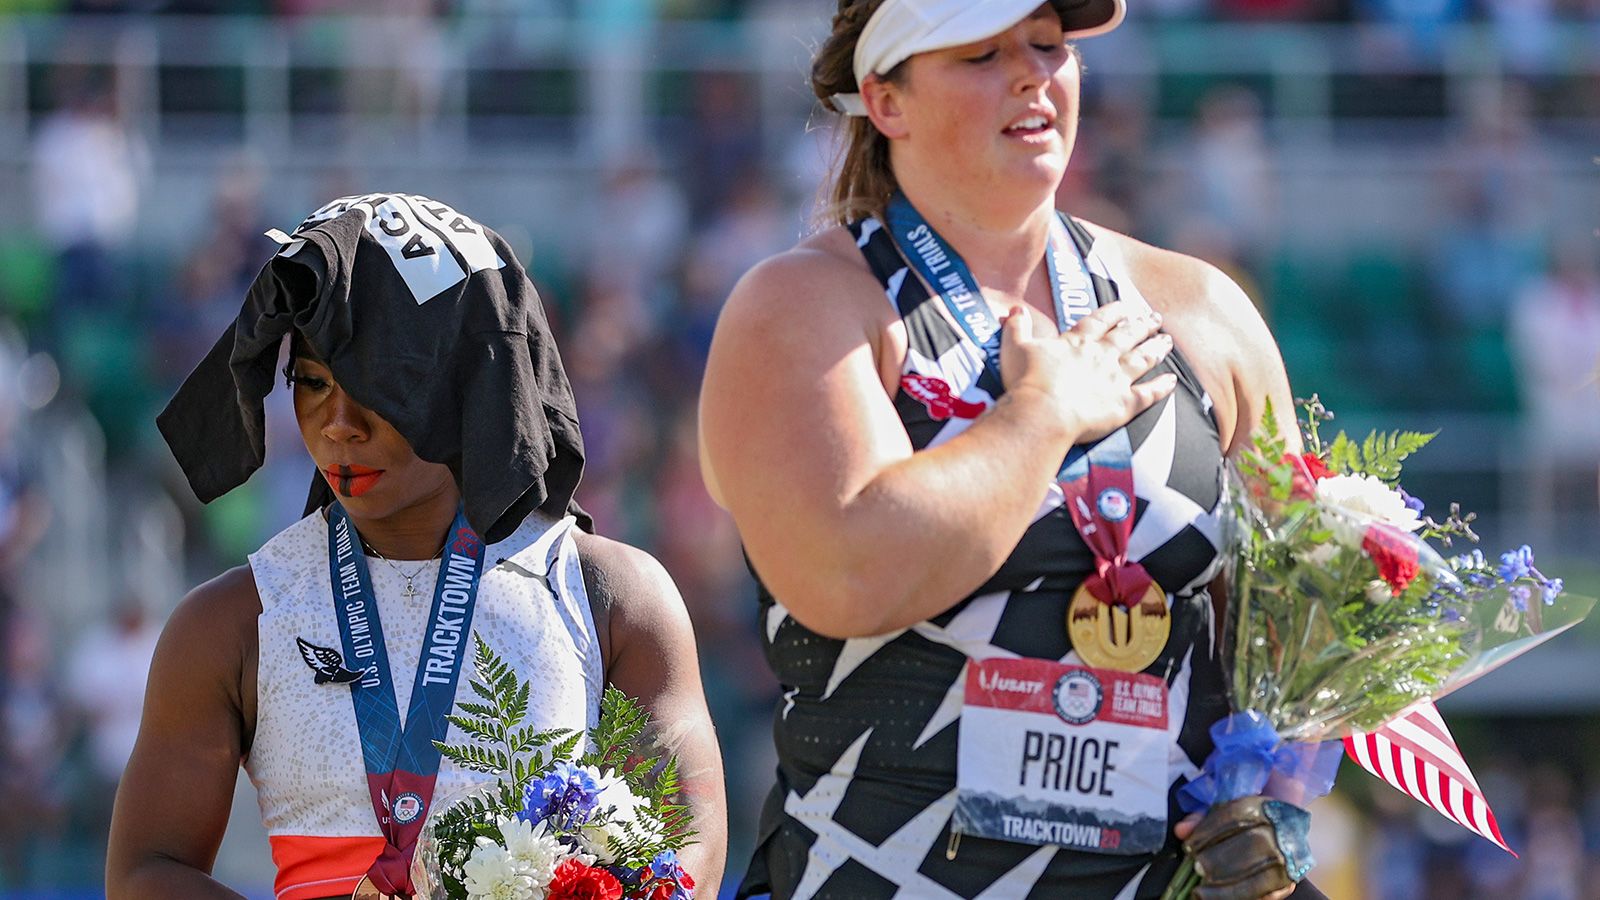 Black women Olympians interviewed: Gwen Berry, Sha'Carri